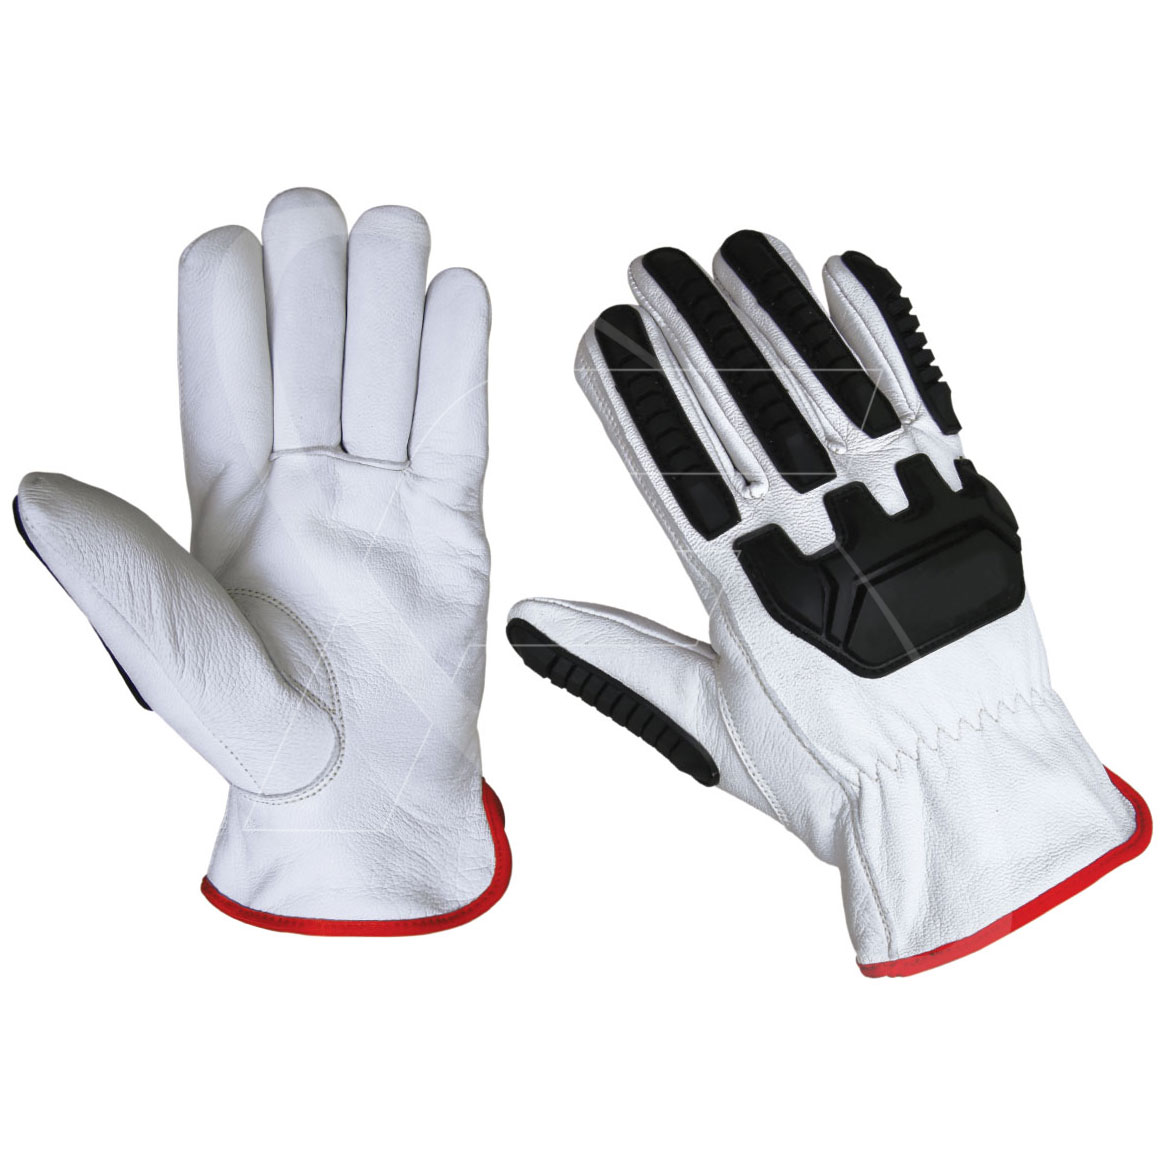 Anti Impact Goatskin Driver Gloves Best Quality Impact Safety Driving Gloves Best Choice Impact Gloves